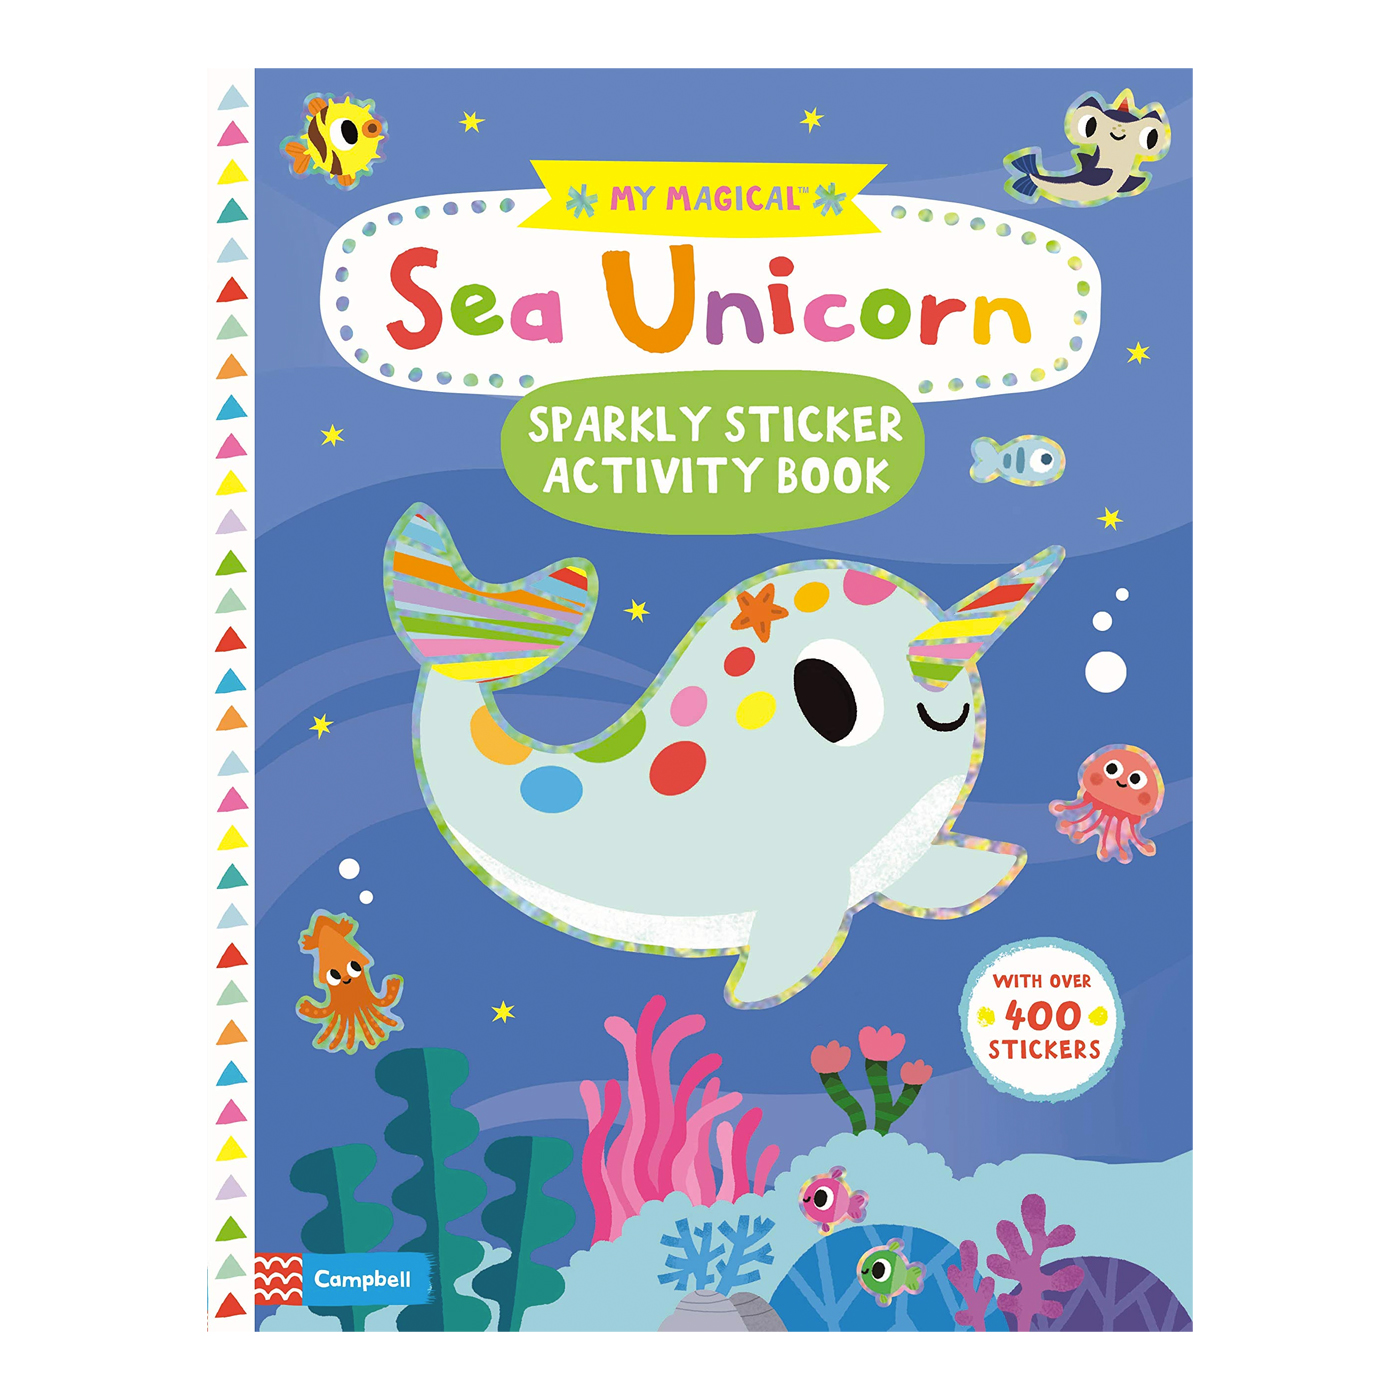  My Magical Sea Unicorn Sparkly Sticker Activity Book